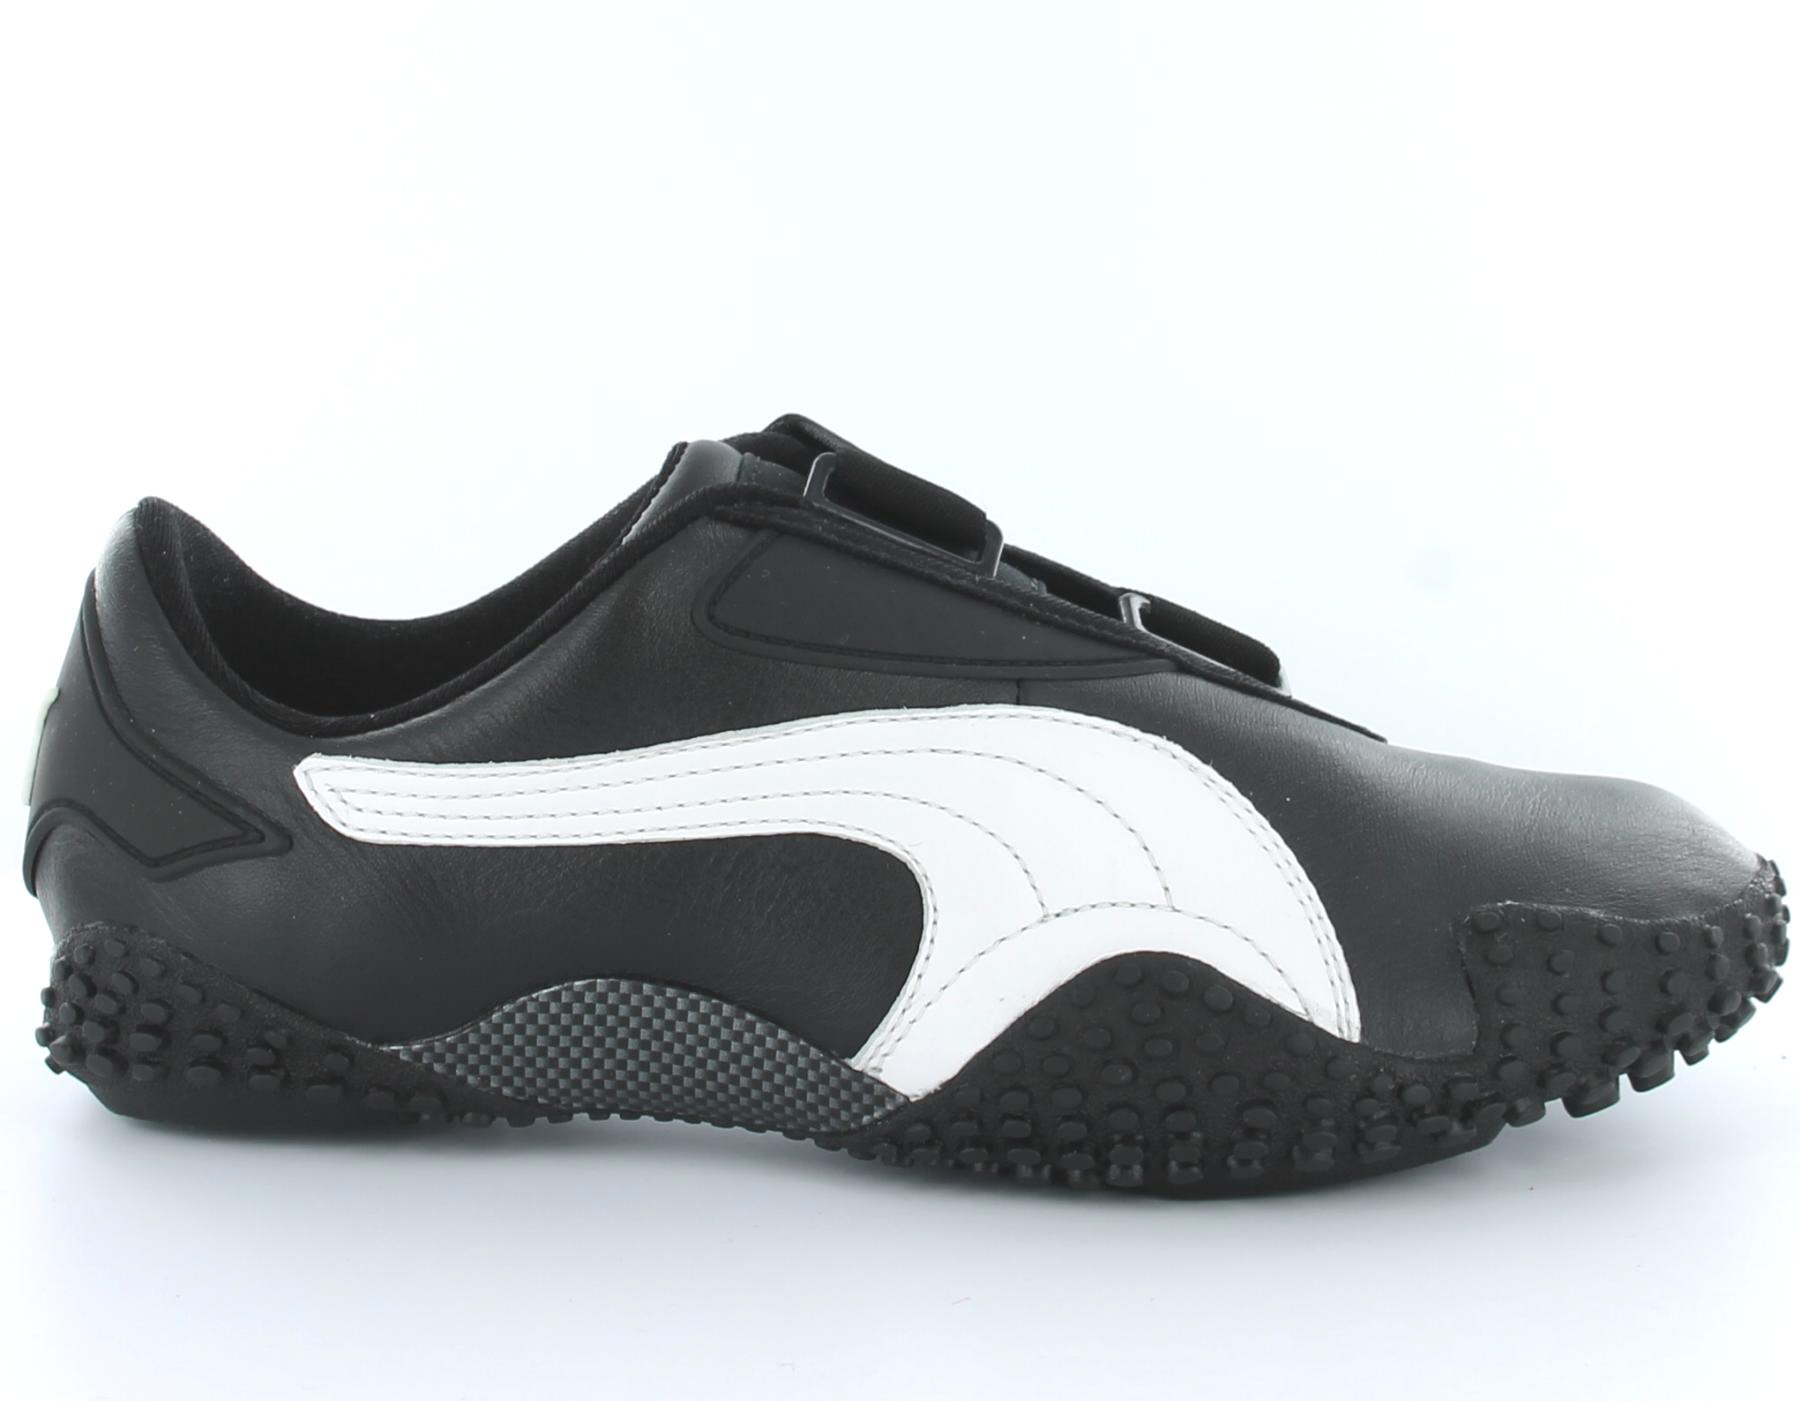 puma chaussure 2000